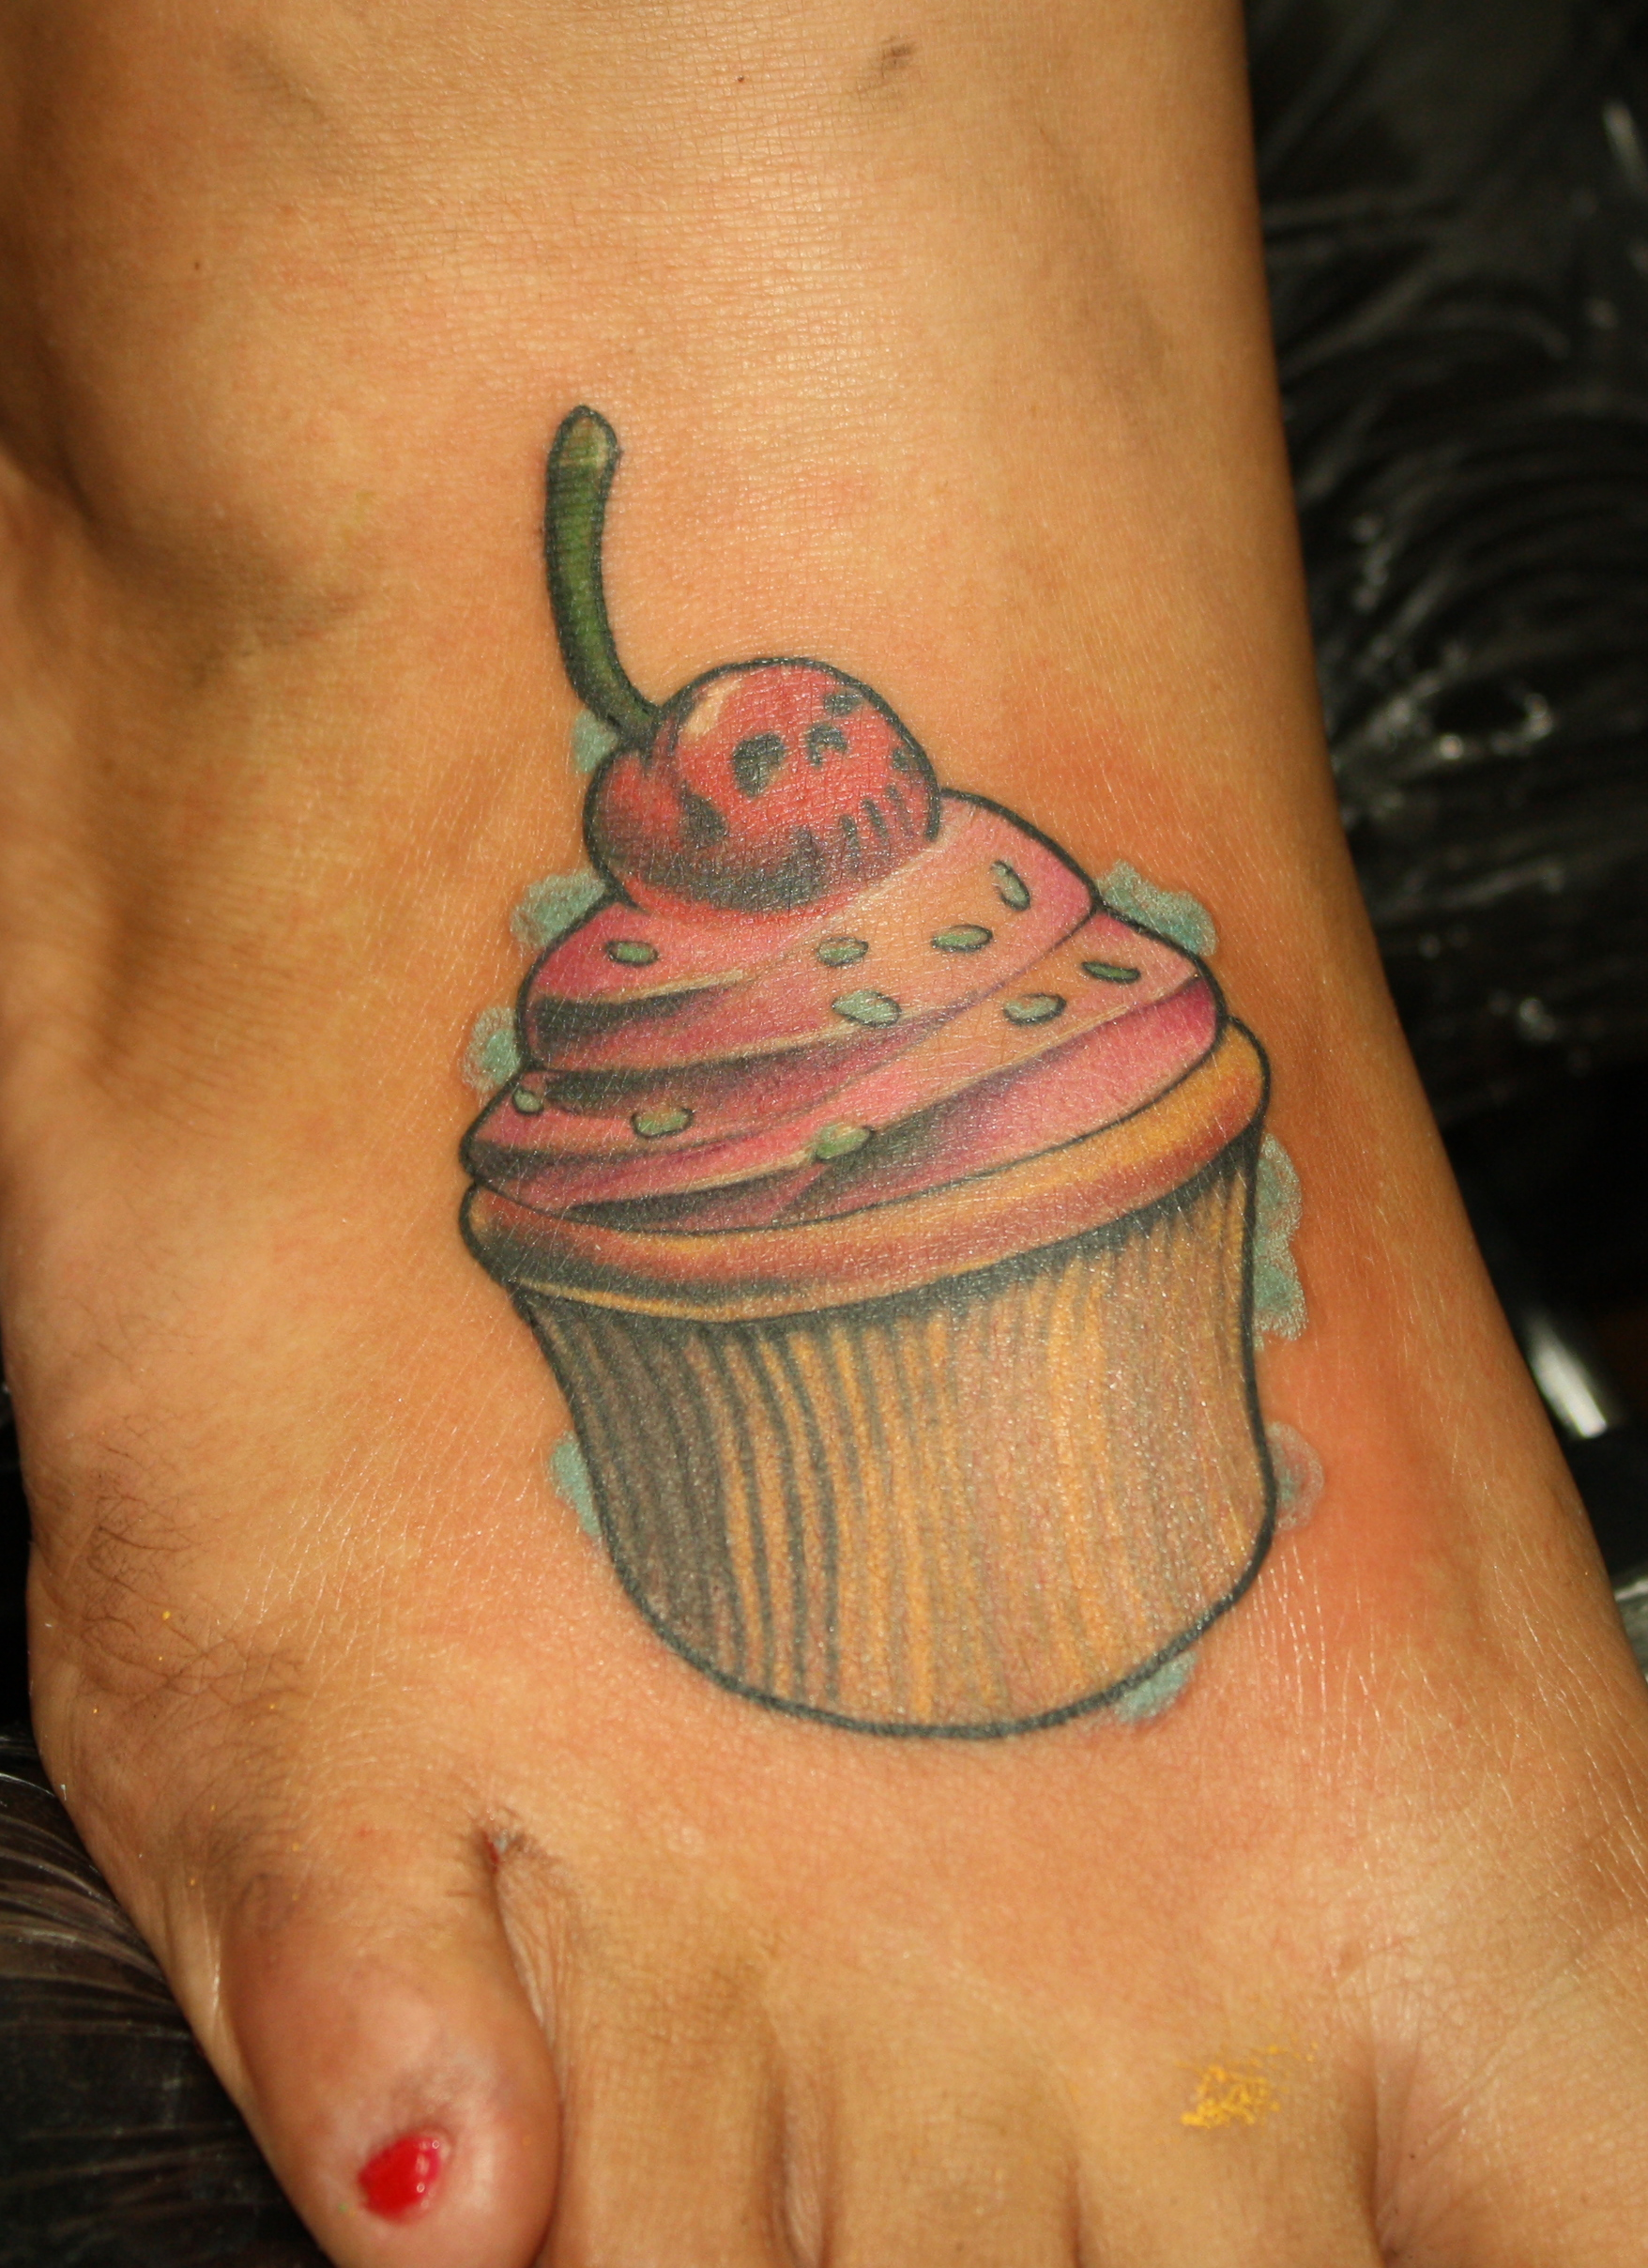 Cupcake Foot Tattoo.